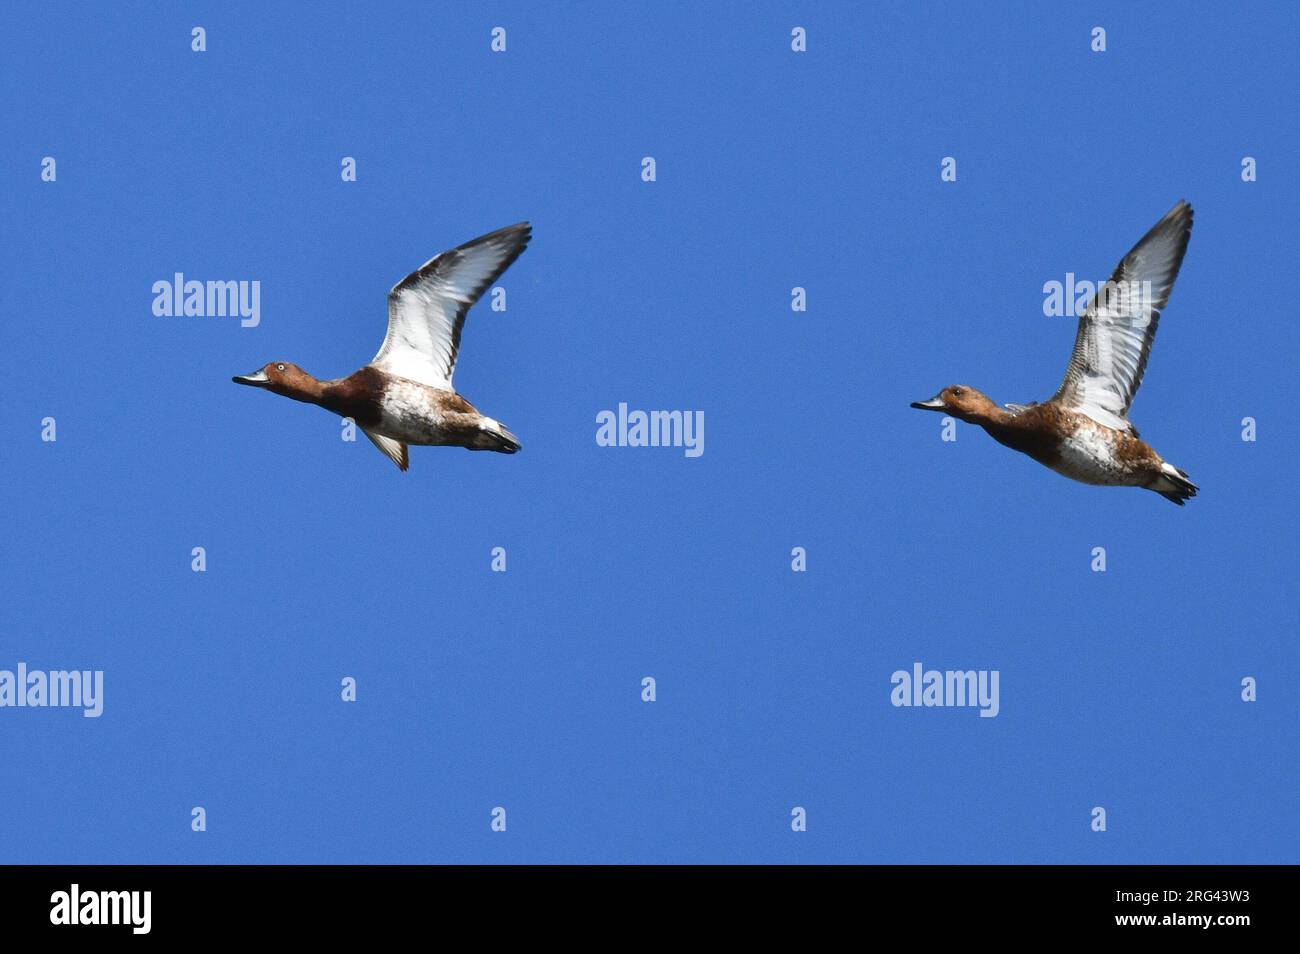 Canard ferrugineux (Aythya nyroca) hivernant au Myanmar. Deux canards volant au-dessus. Banque D'Images